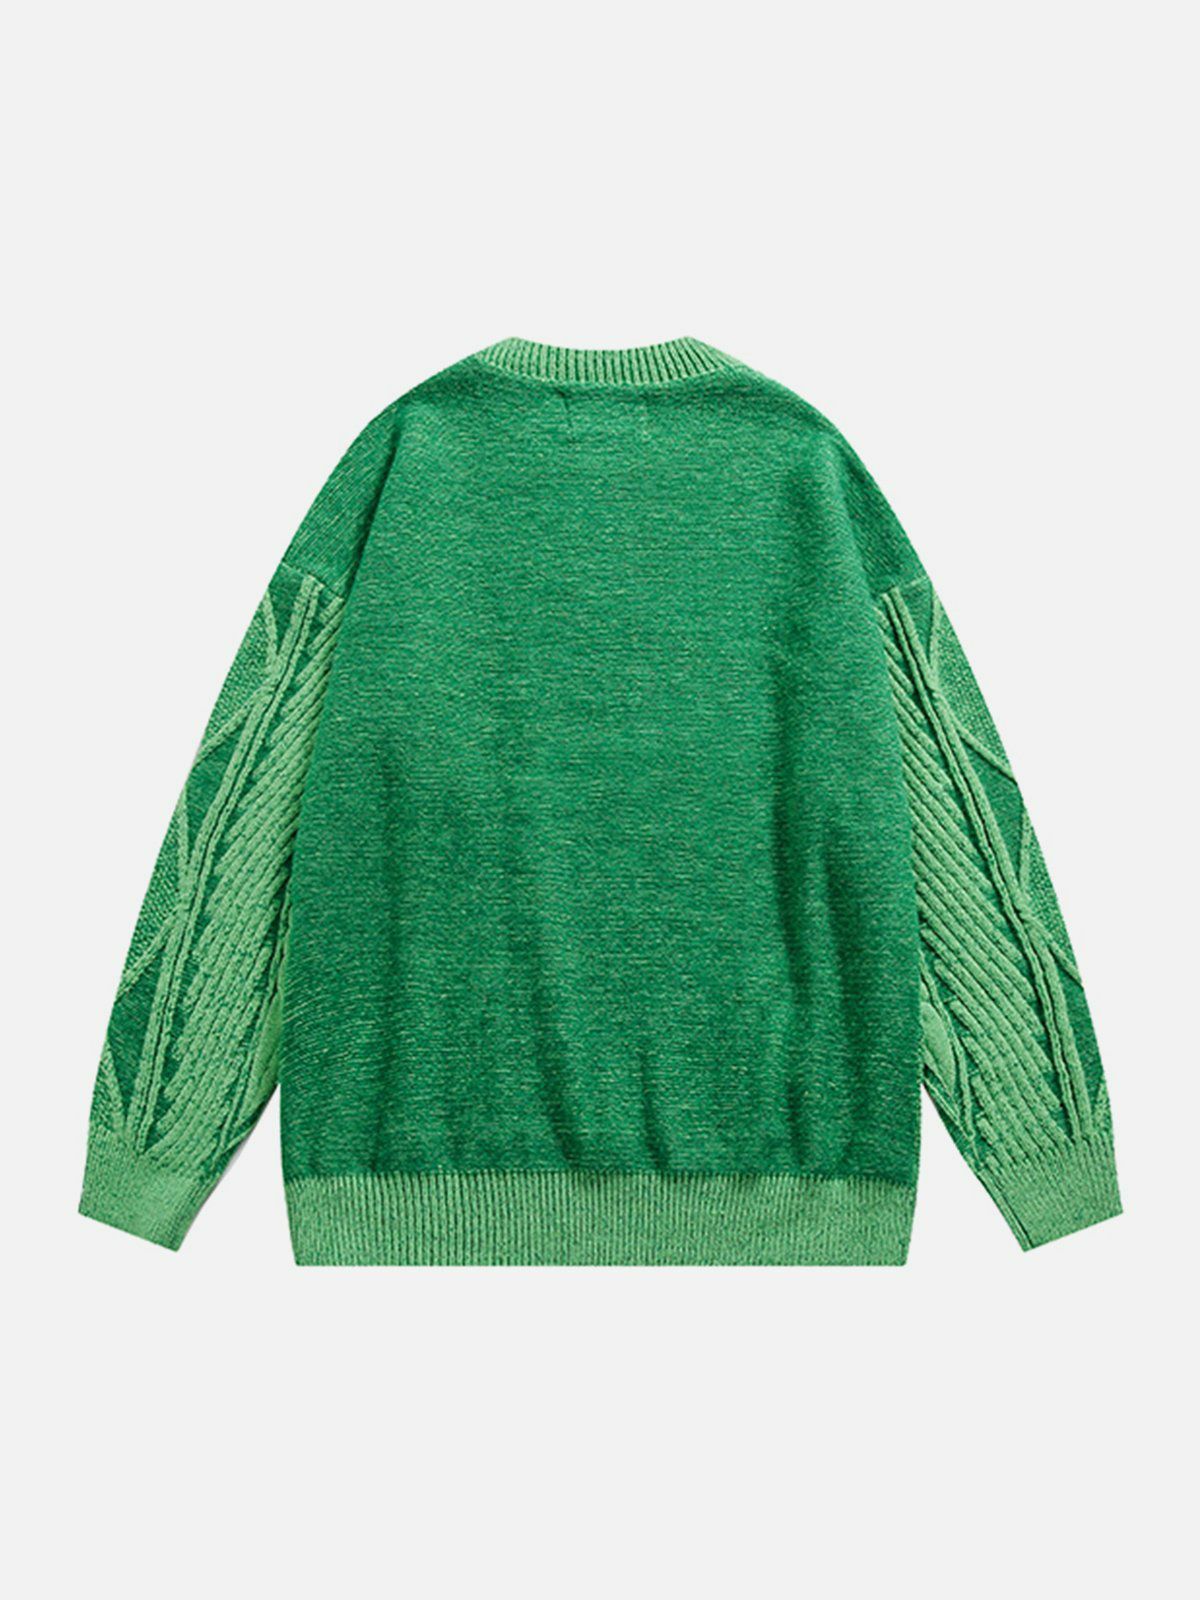 knit rhombus sweater retro & edgy urban fashion 2584